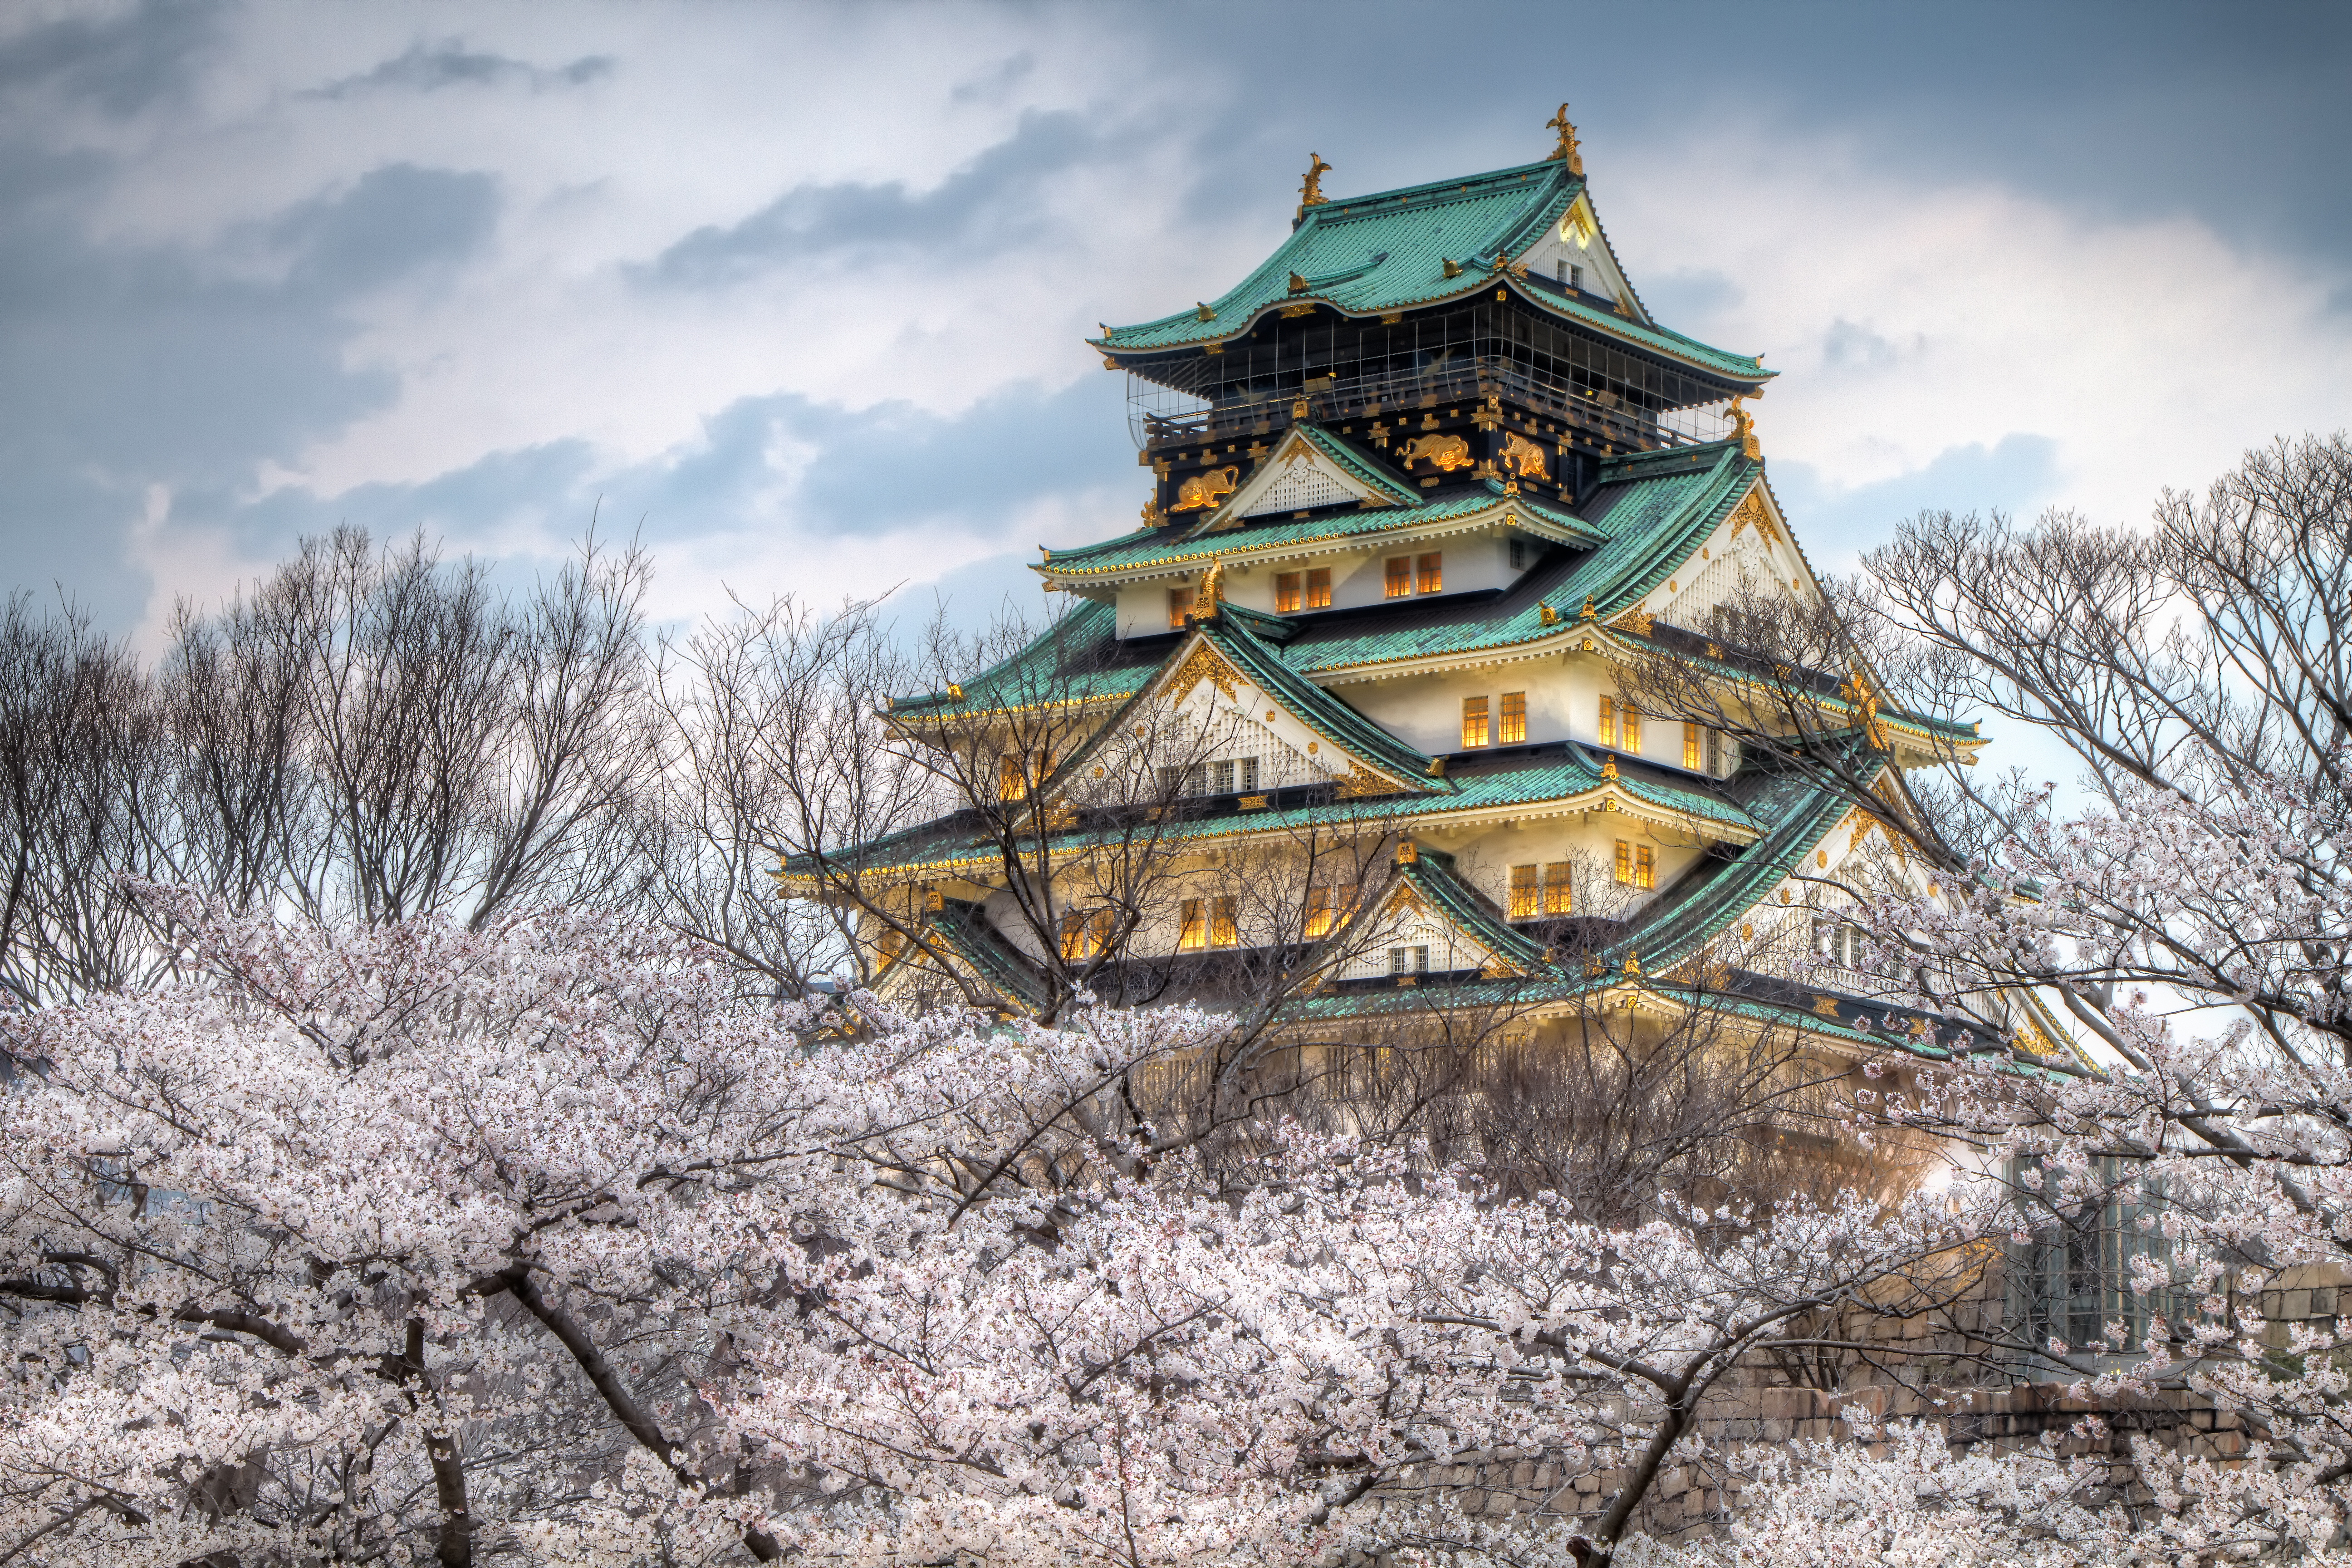 1523184 Заставки и Обои Архитектура на телефон. Скачать осакский замок, япония, сакура, осака картинки бесплатно